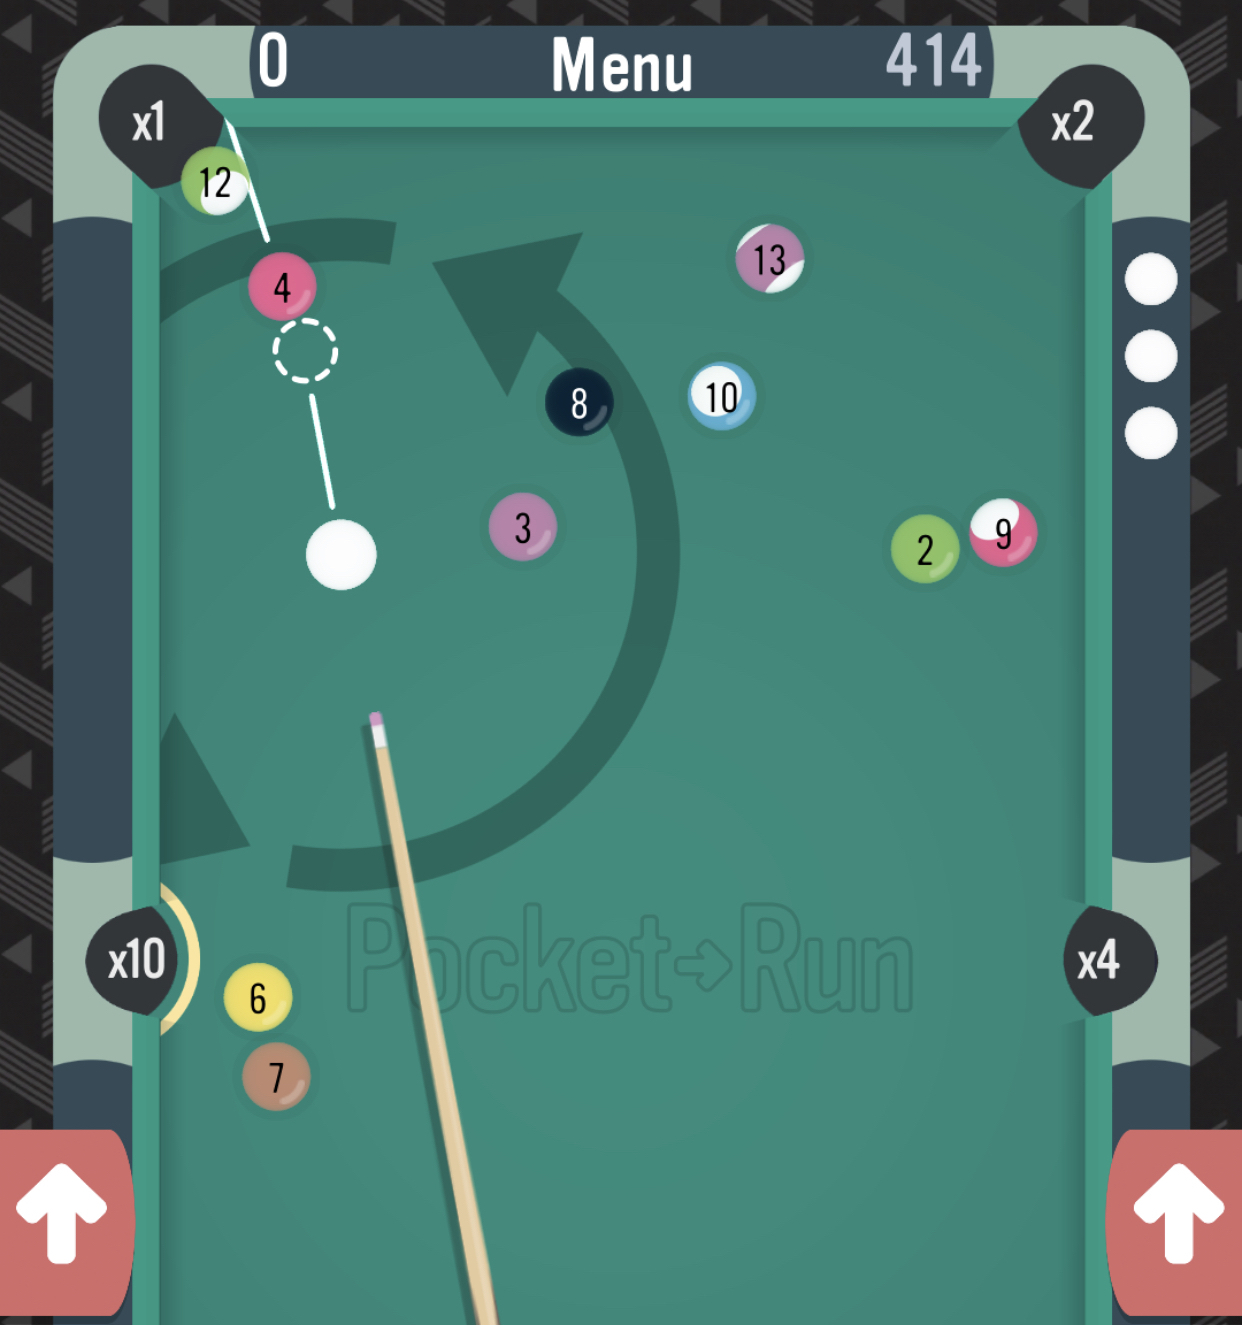 Pocket-Run Pool Is The Best Billiards Game On iOS